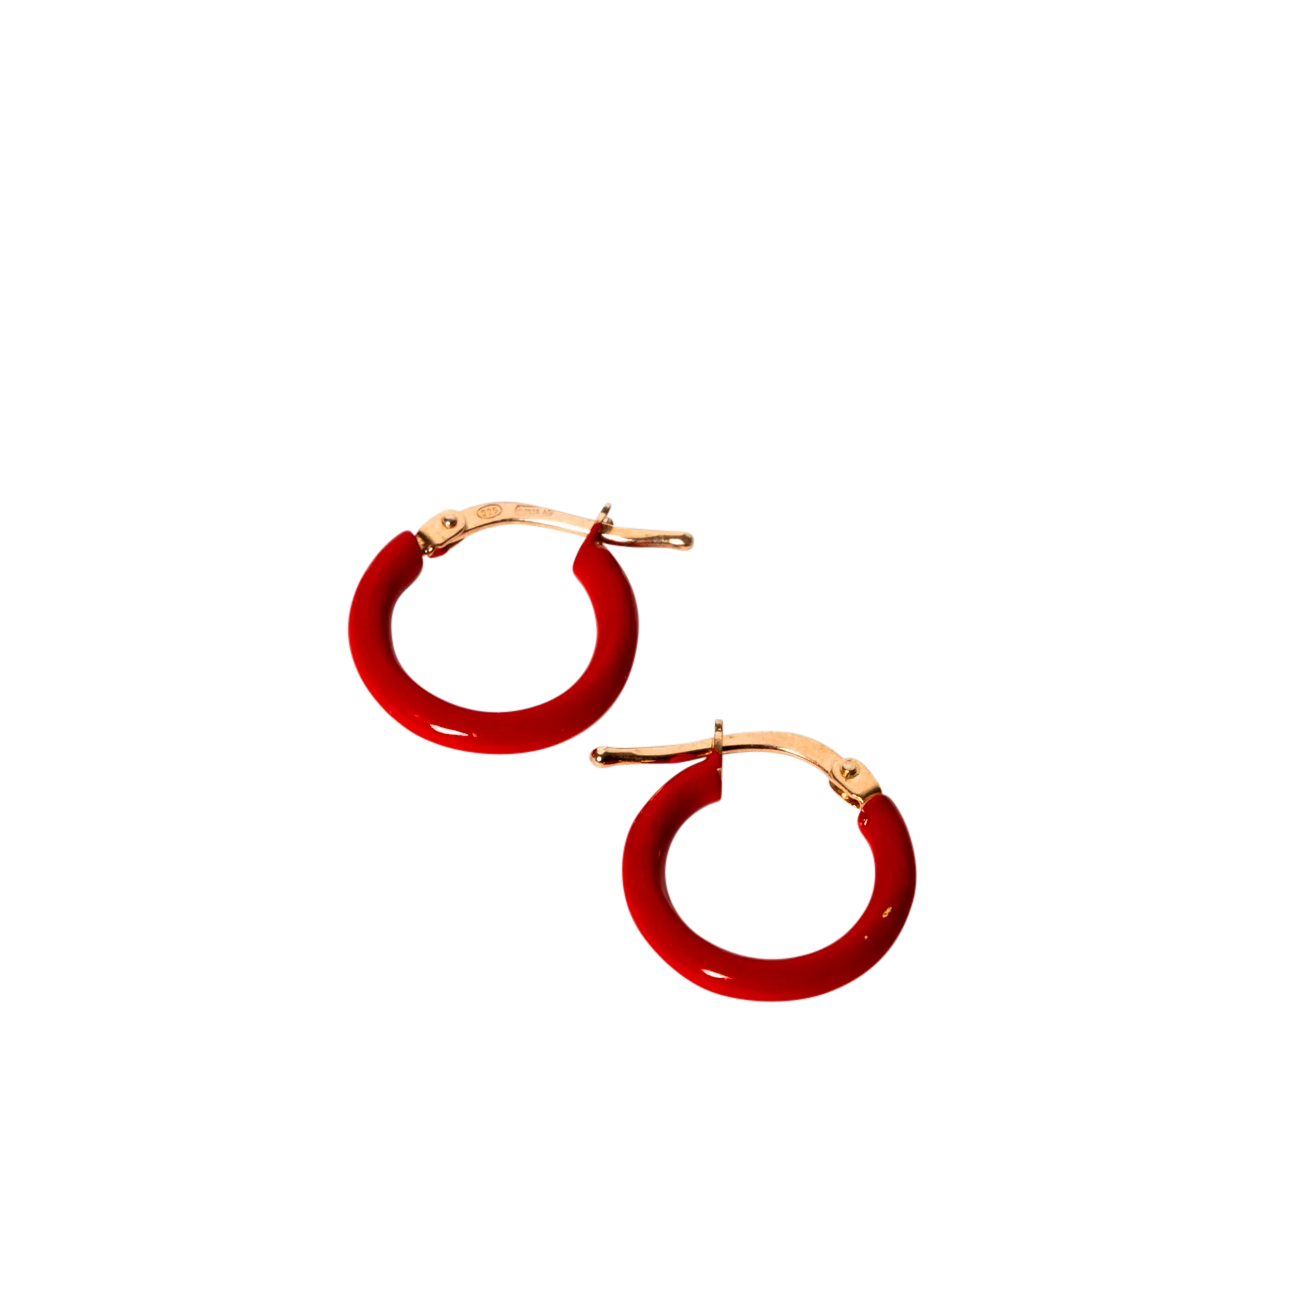 Small Circle Earrings